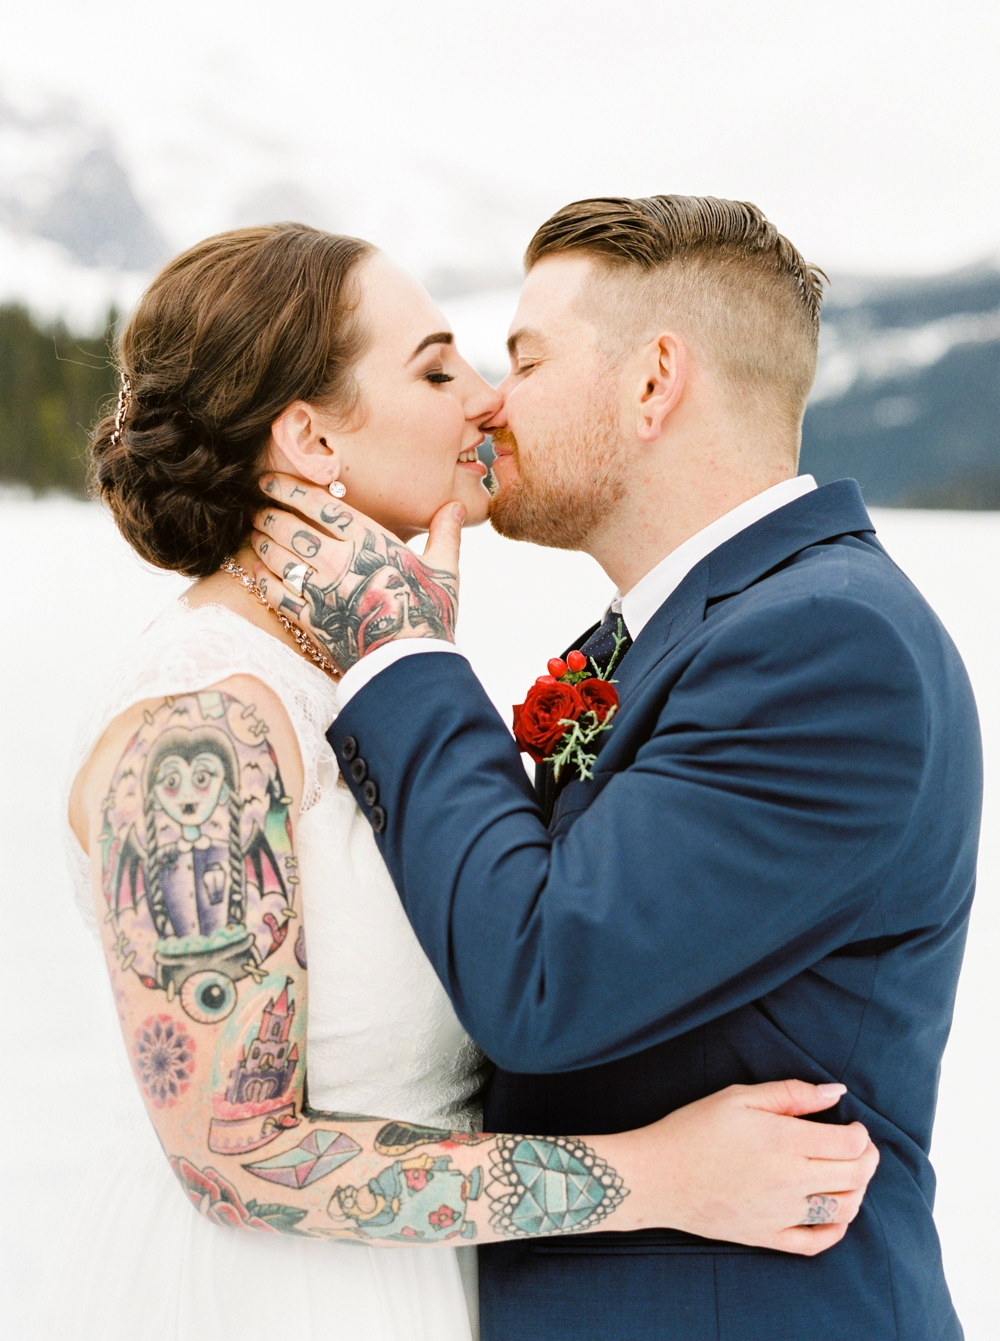 Emerald Lake Lodge Field British Columbia Elopement Photographers | Fine art film destination wedding photography | winter wedding